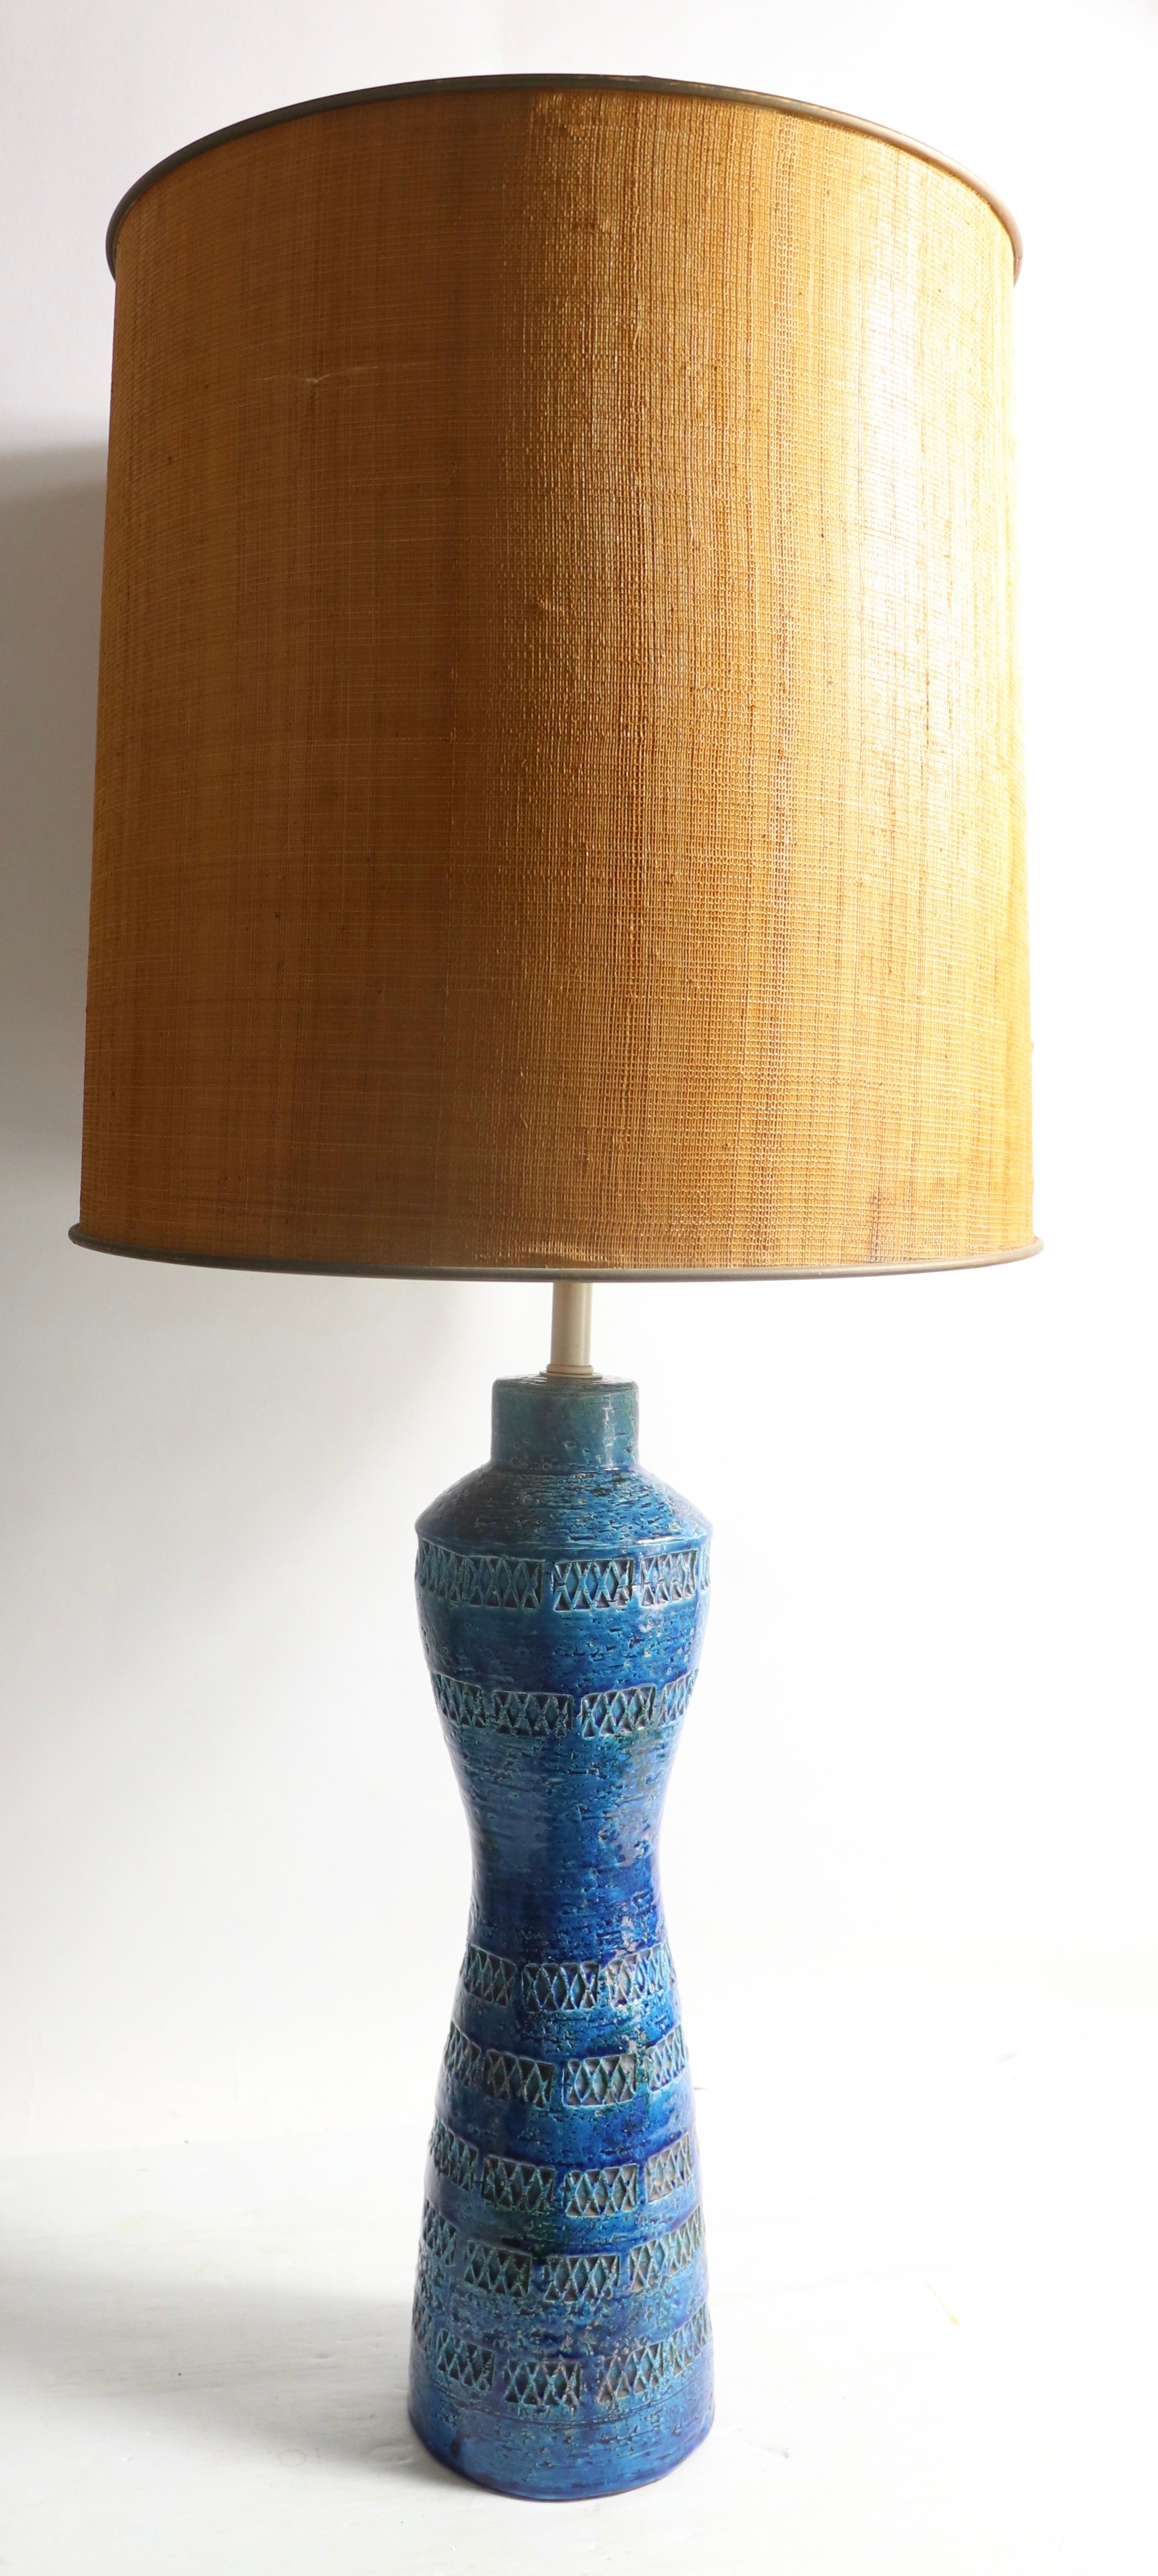 European Bitossi Rimini Blu Table Lamp by Aldo Londi for Raymor Made in Italy Ca. 1960's